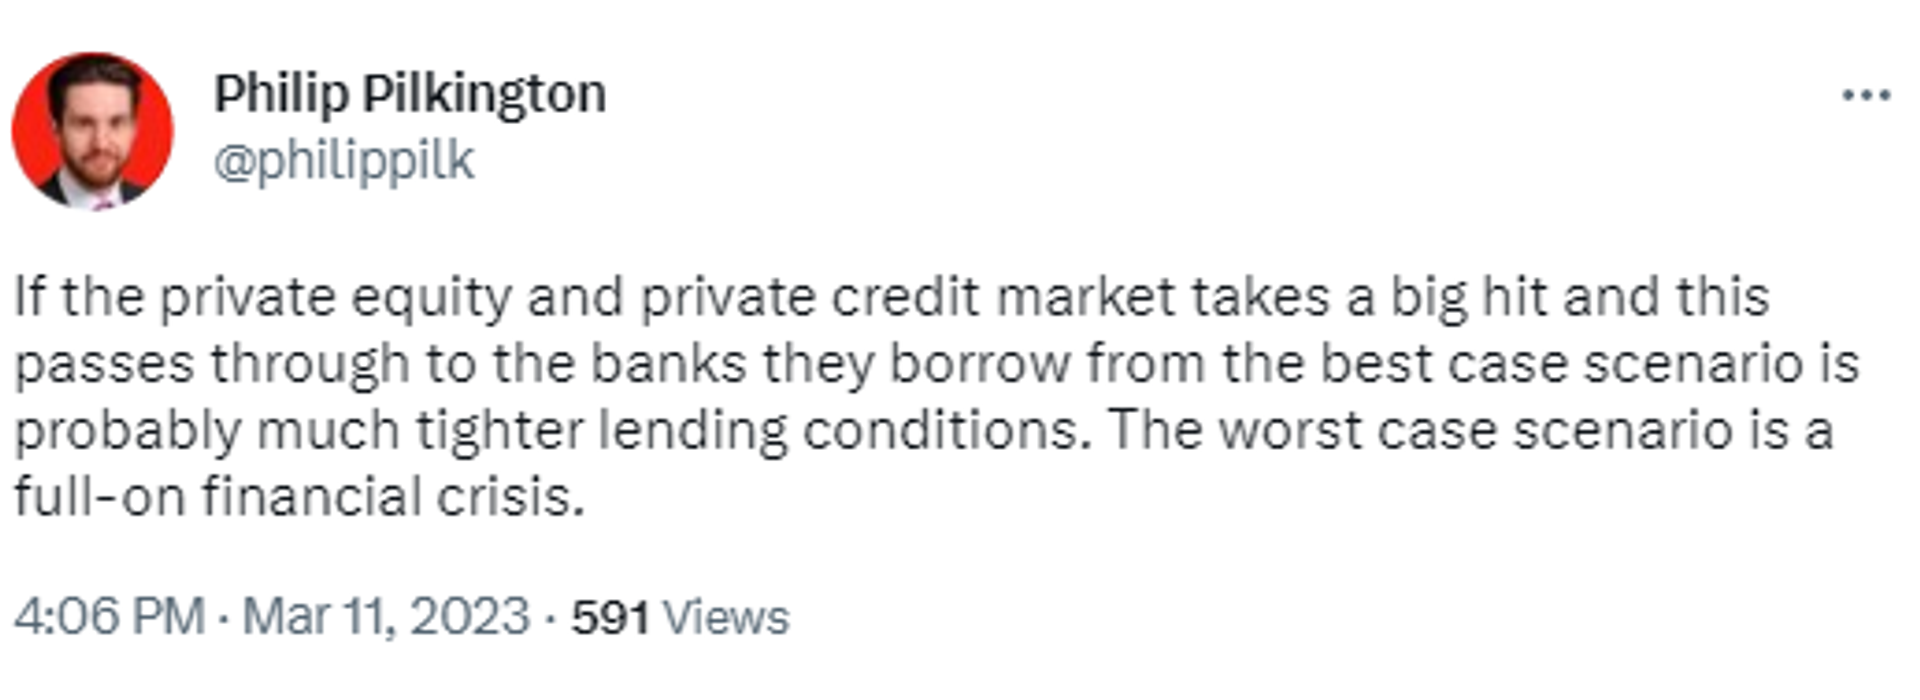 Screenshot of Twitter post by Philip Pilkington, Irish economist working in investment finance.  - Sputnik International, 1920, 11.03.2023